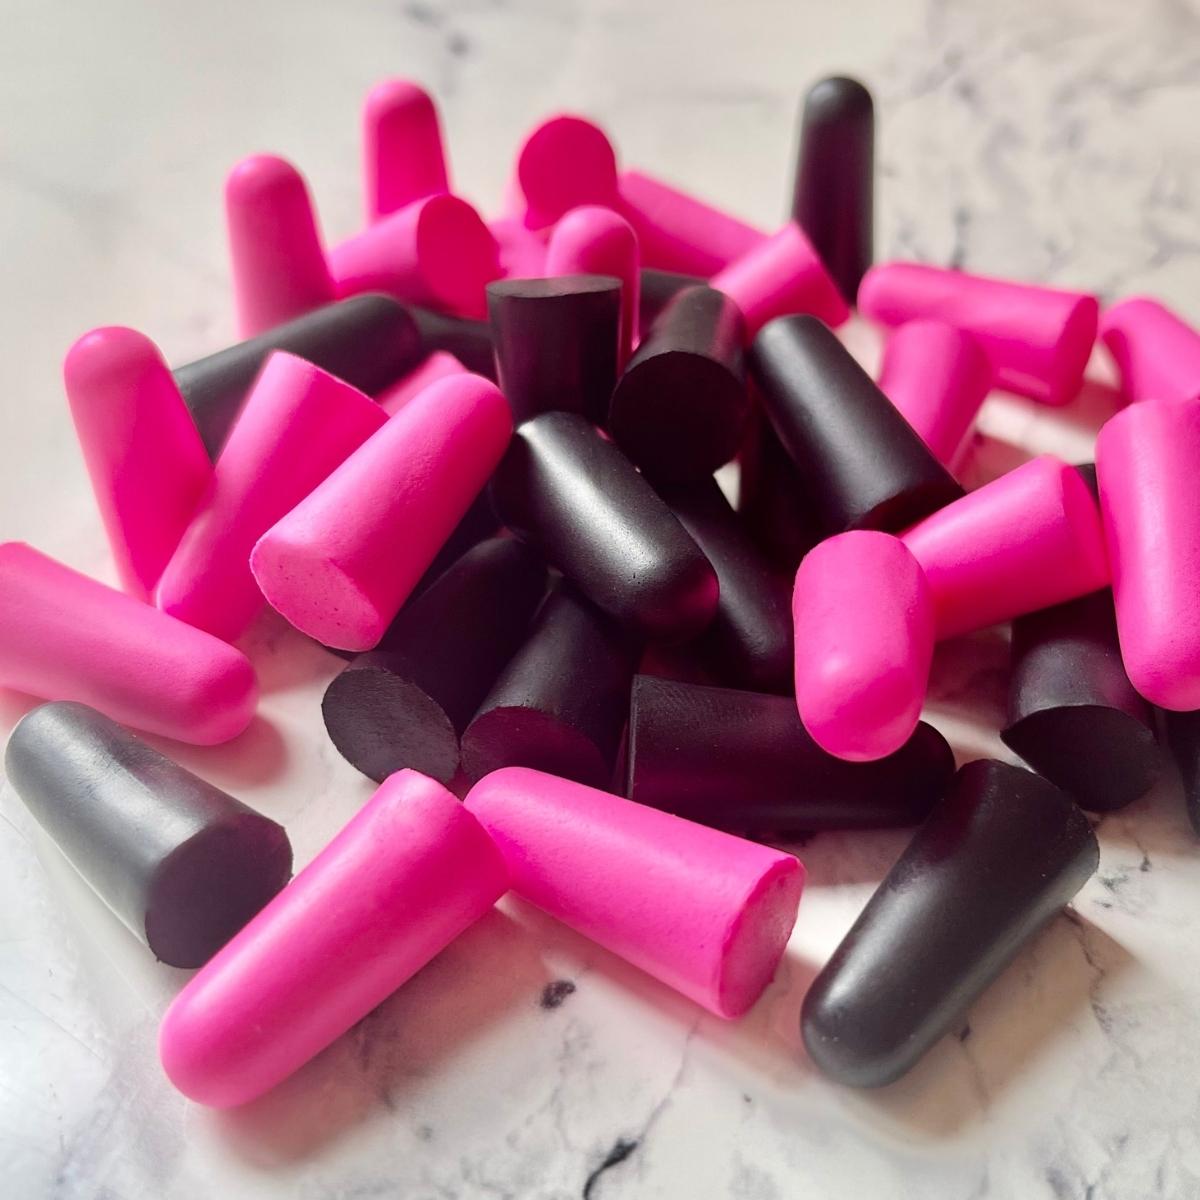 Memory Foam Earplugs - Bright Pink (5 packs)